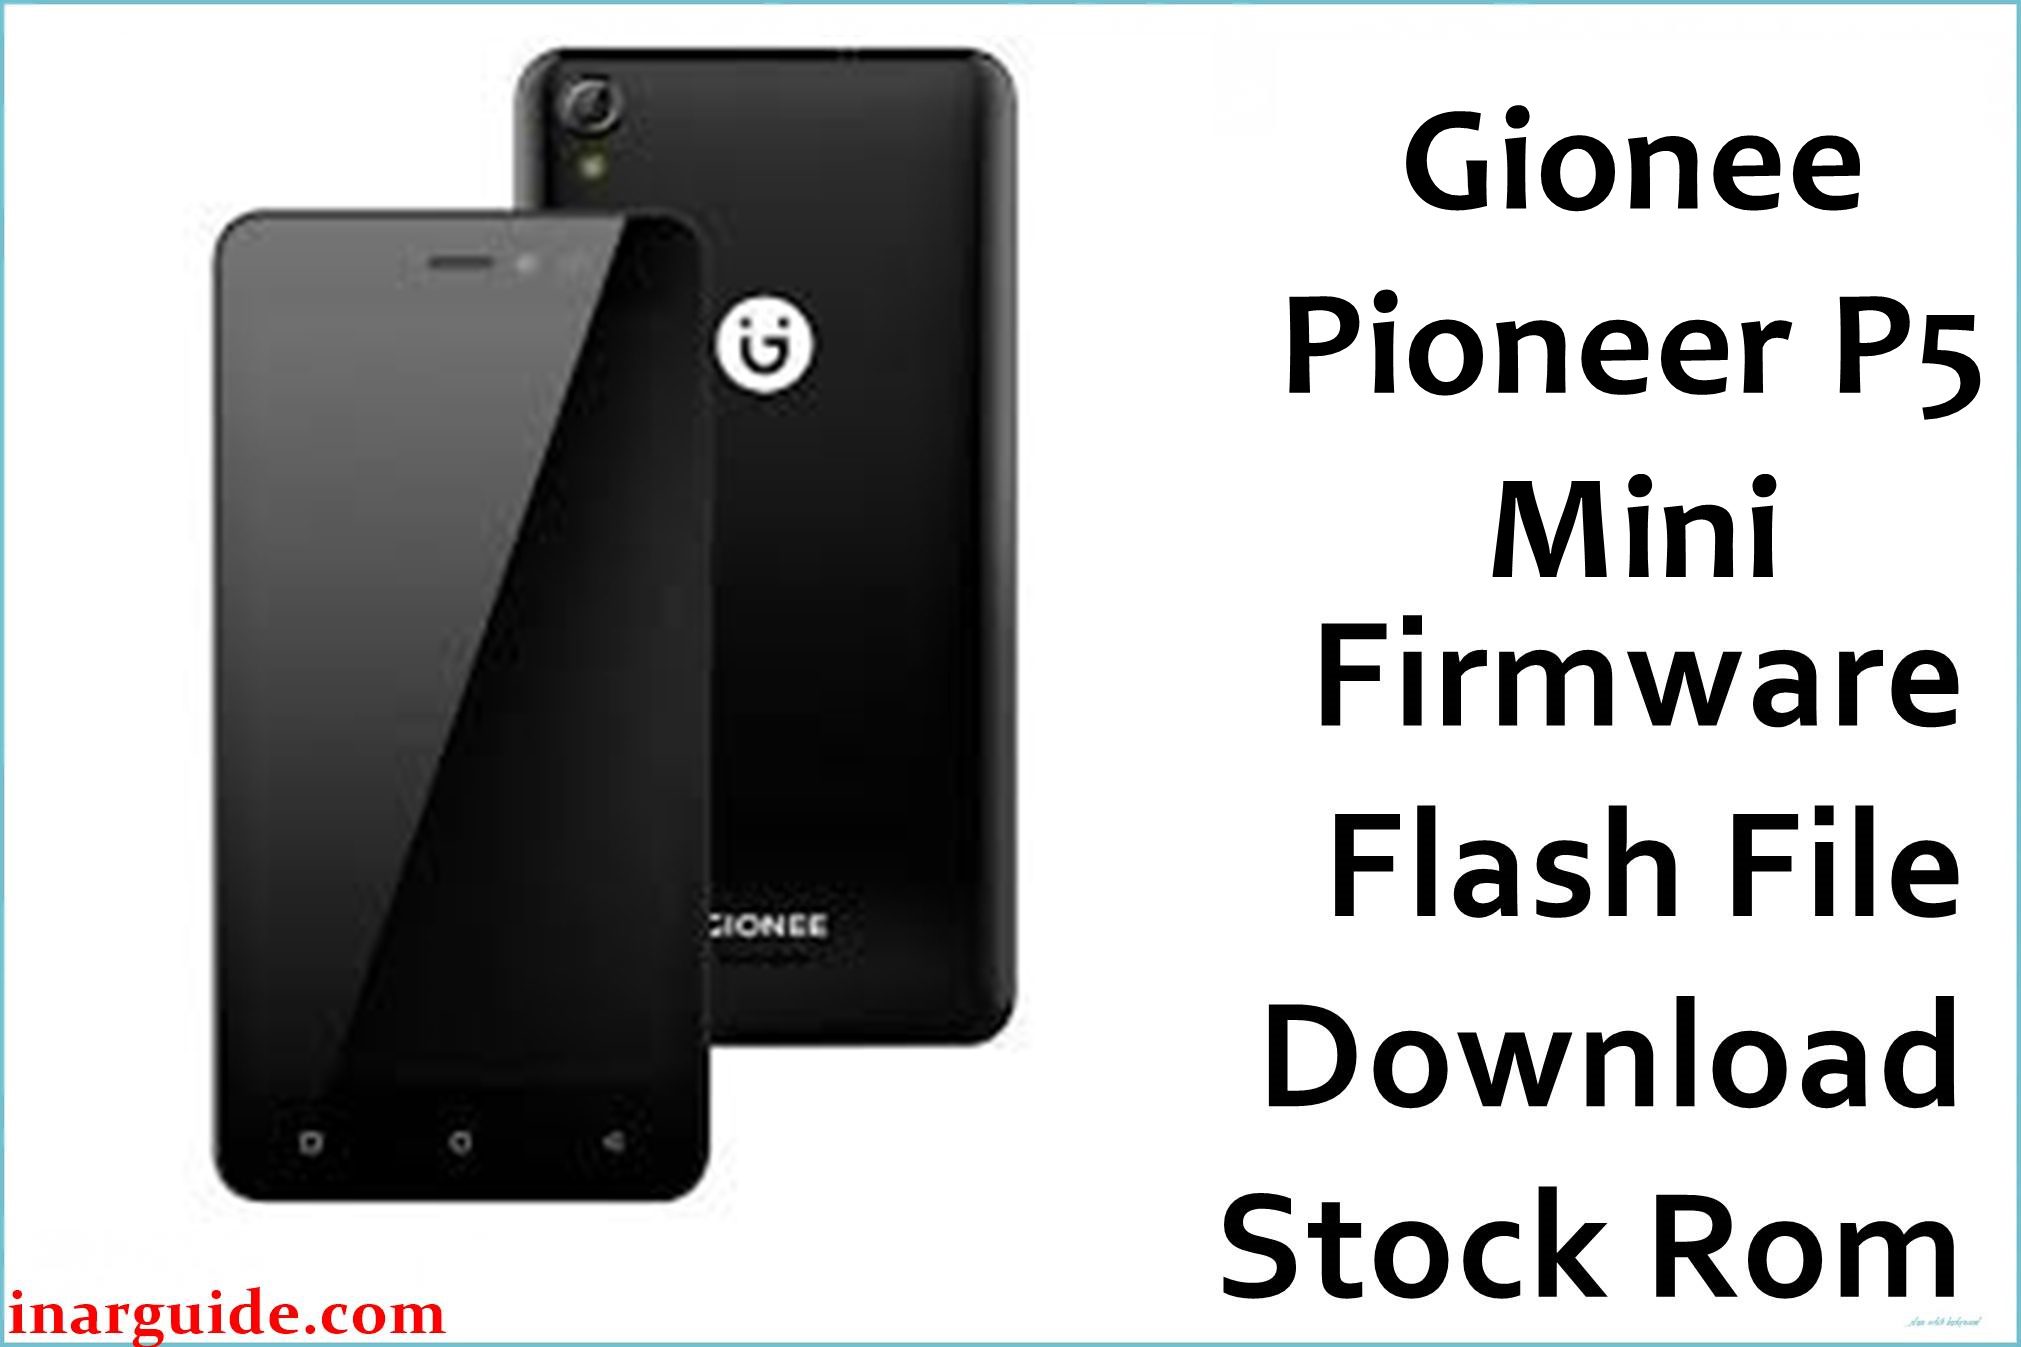 Gionee Pioneer P5 Mini